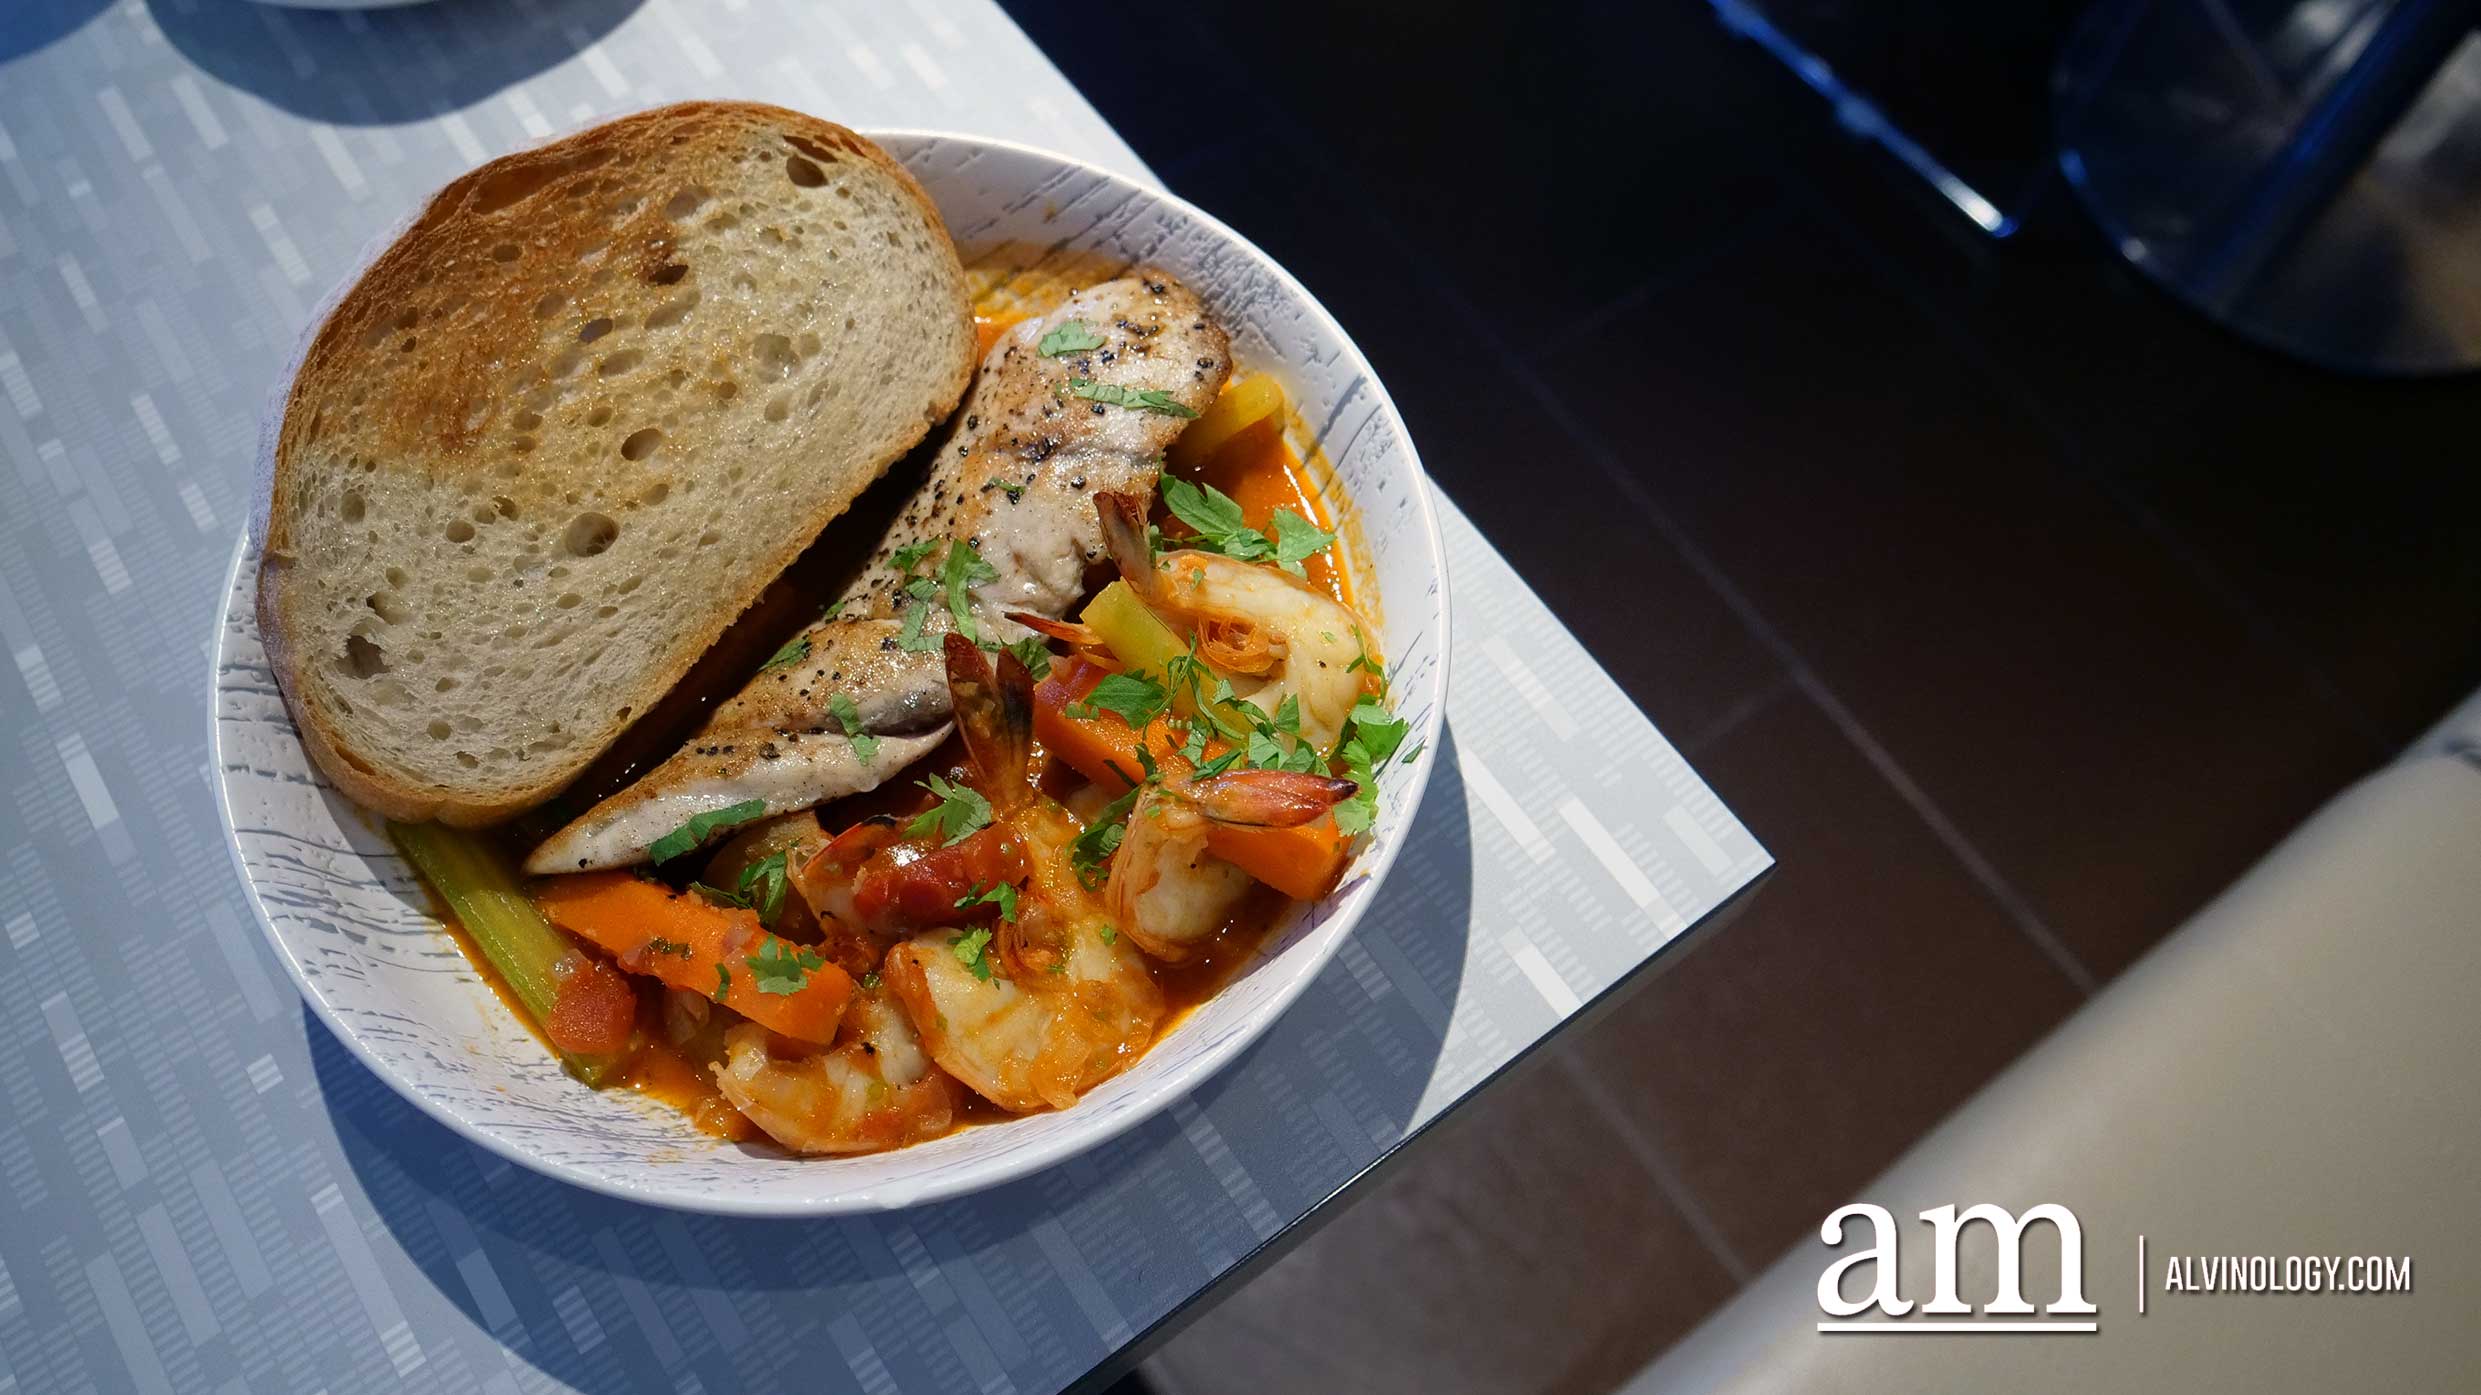 Seafood Casserole (S$22) - Barramundi, prawn, carrot, celery, potato, saffron, tomato sauce